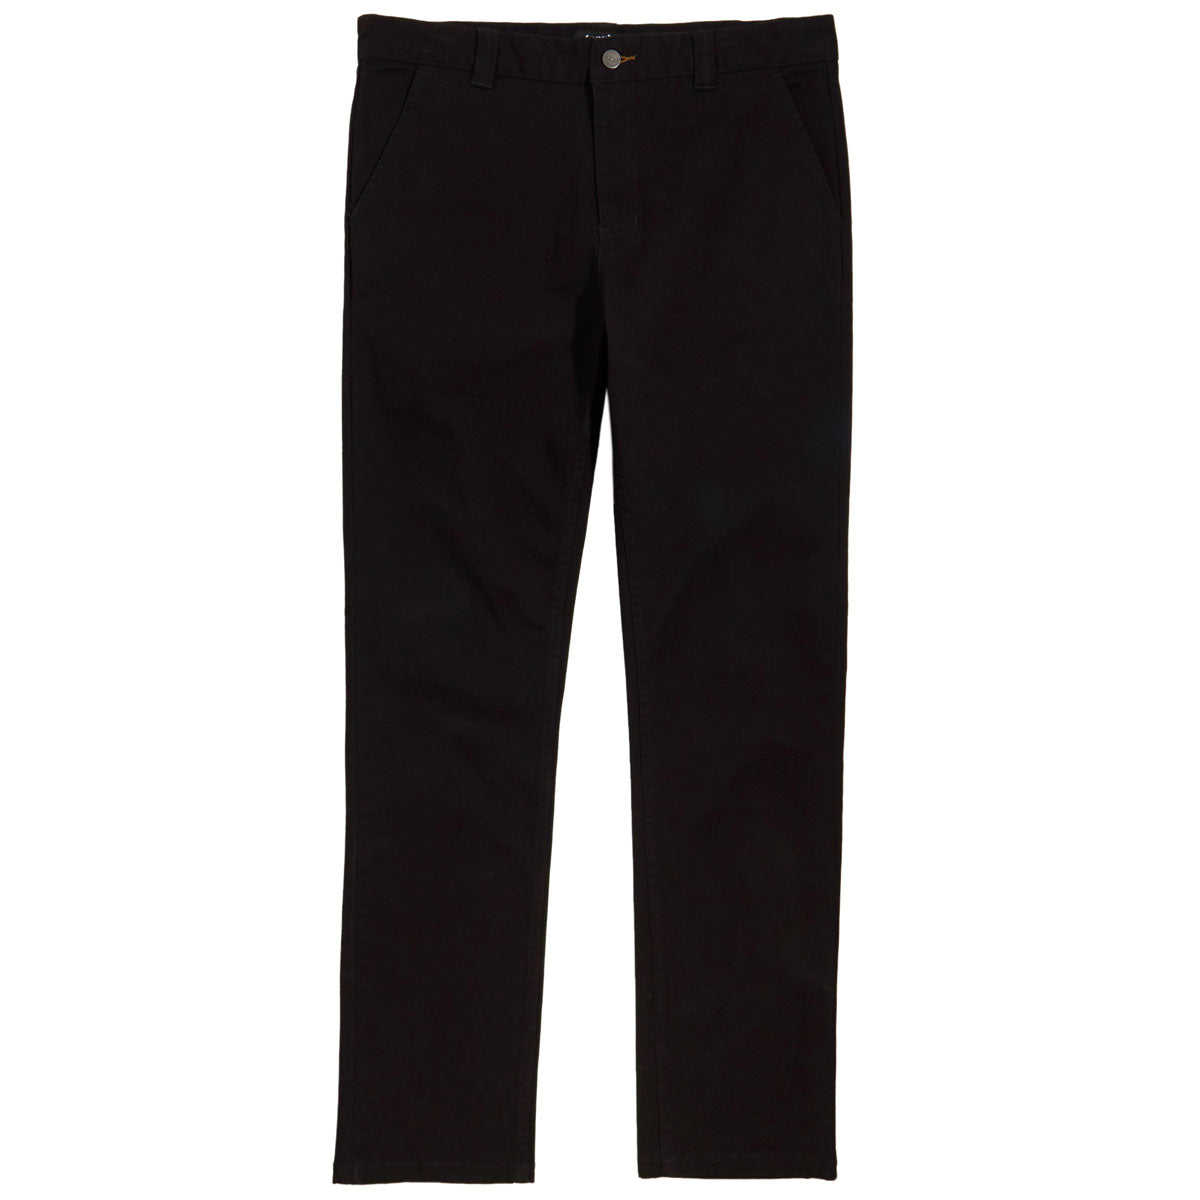 CCS Standard Plus Slim Chino Pants - Black image 5